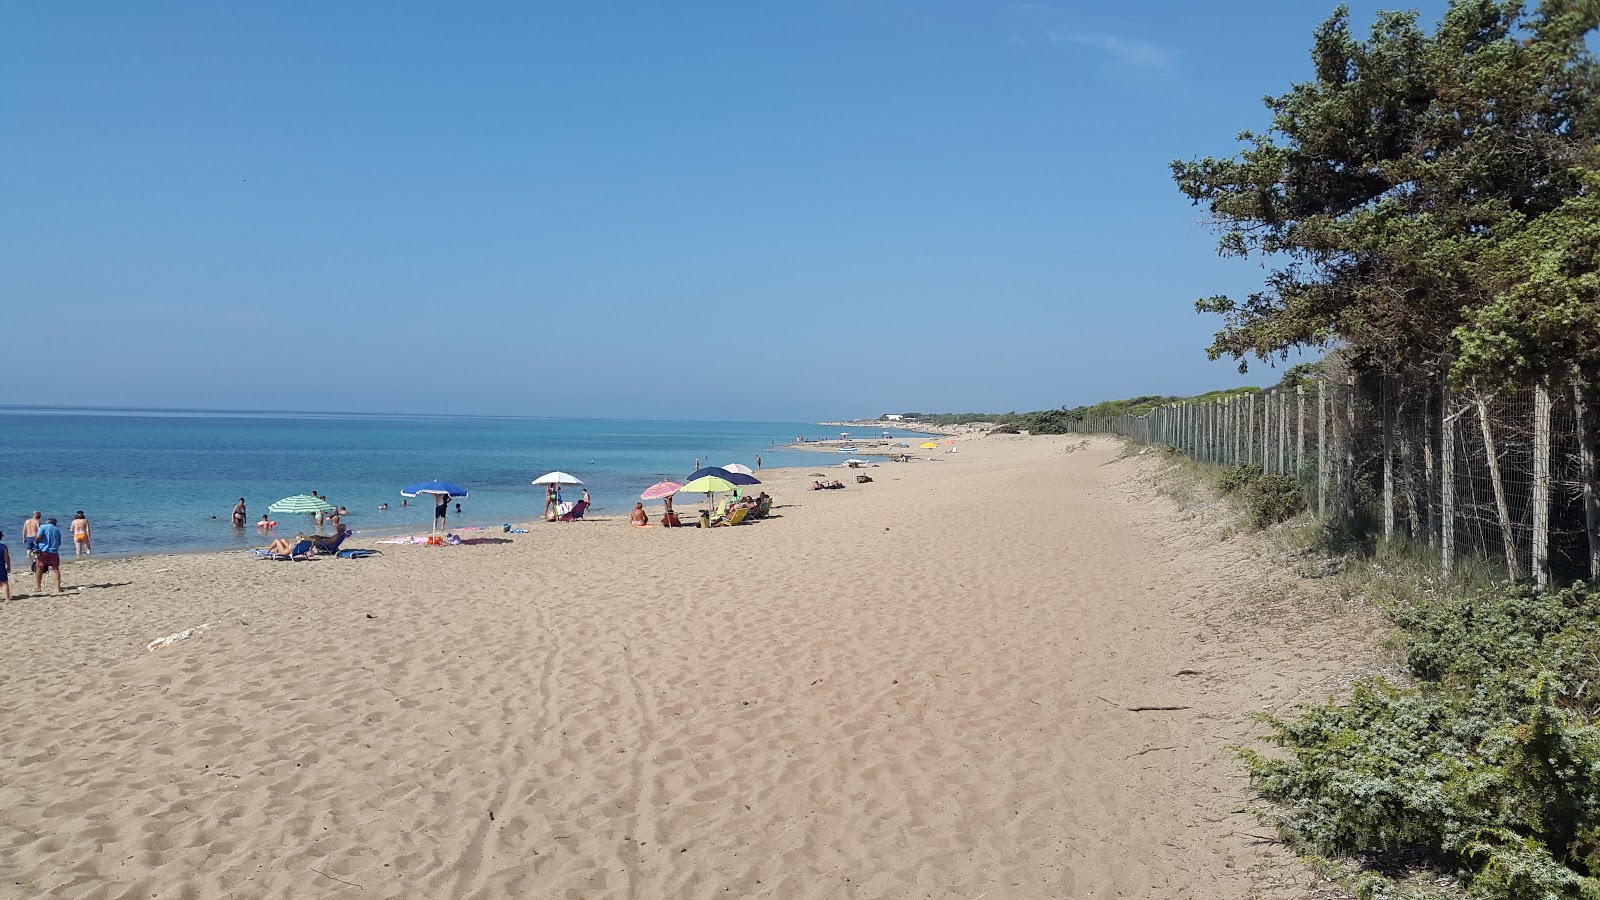 Fotografija Spiaggia d'Ayala z turkizna čista voda površino